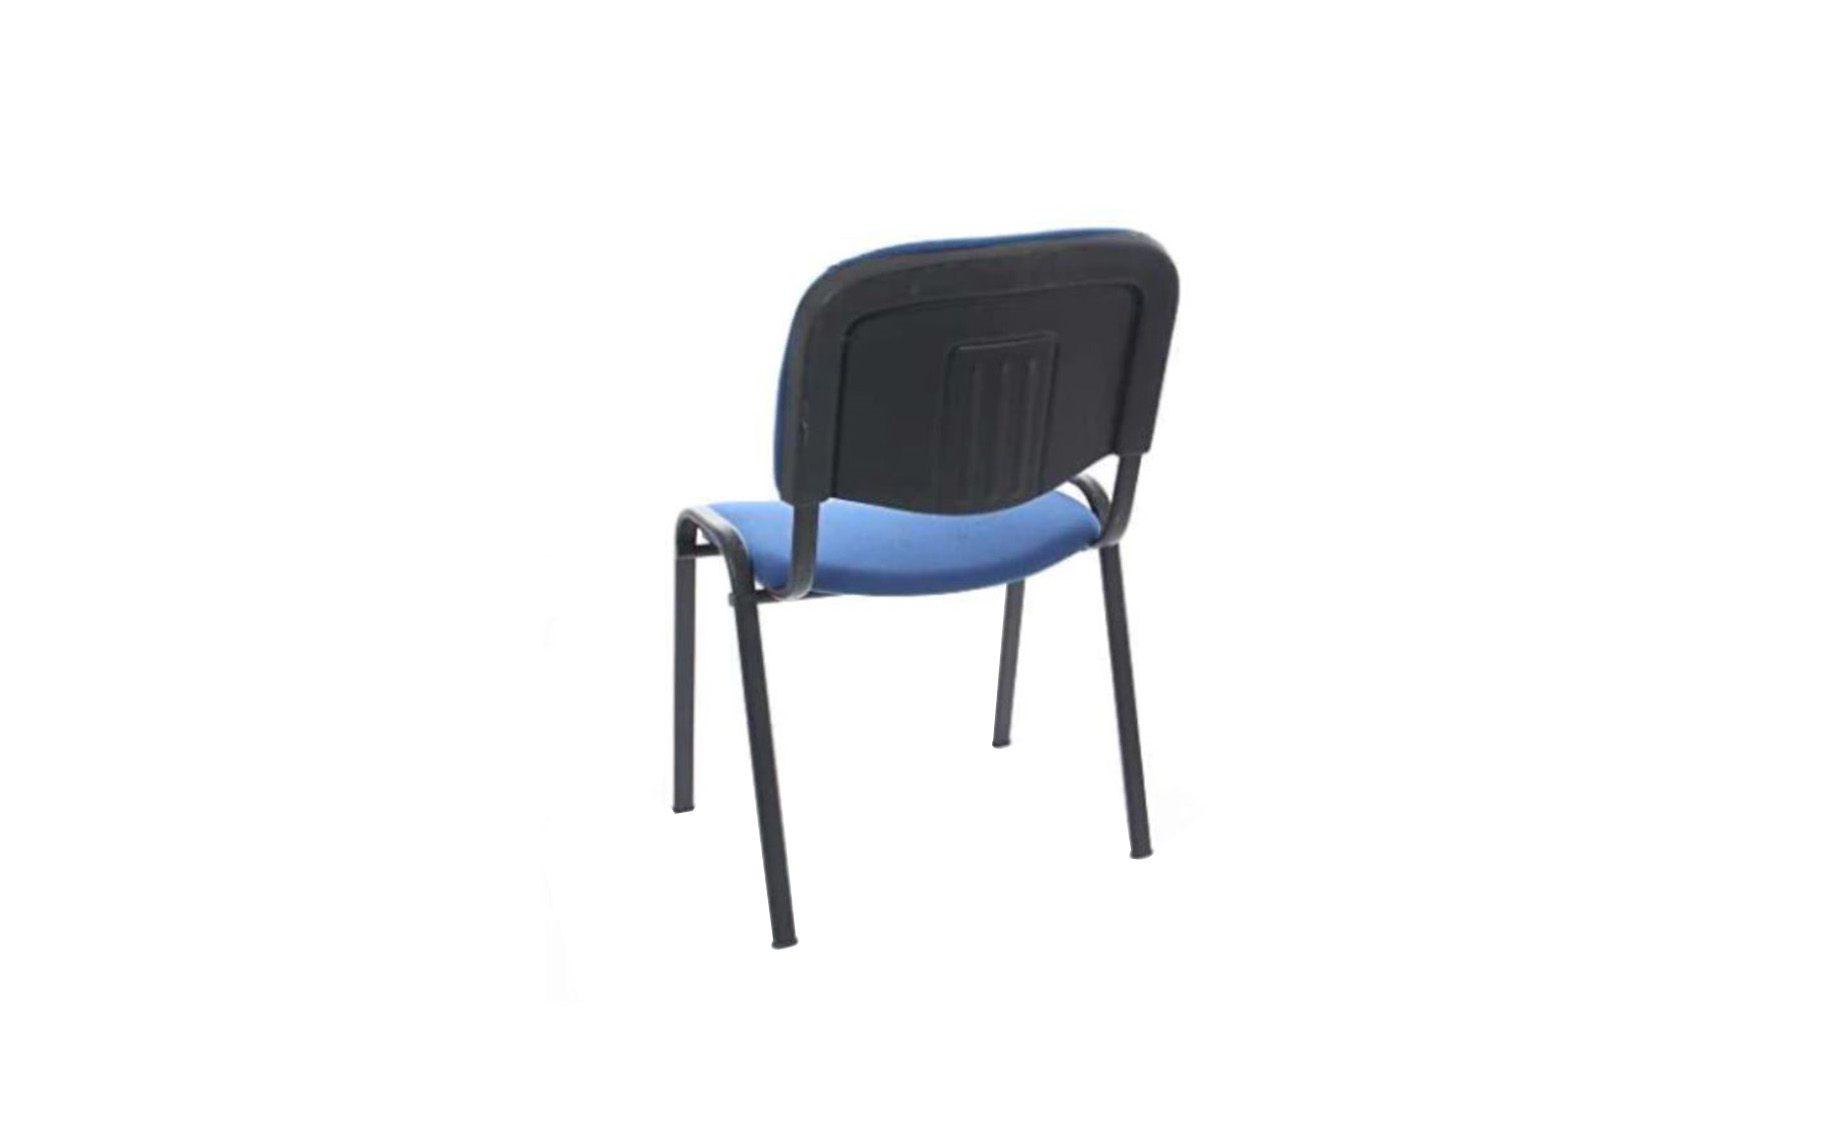 Iso konferencijska stolica 53,5x42x81cm plava